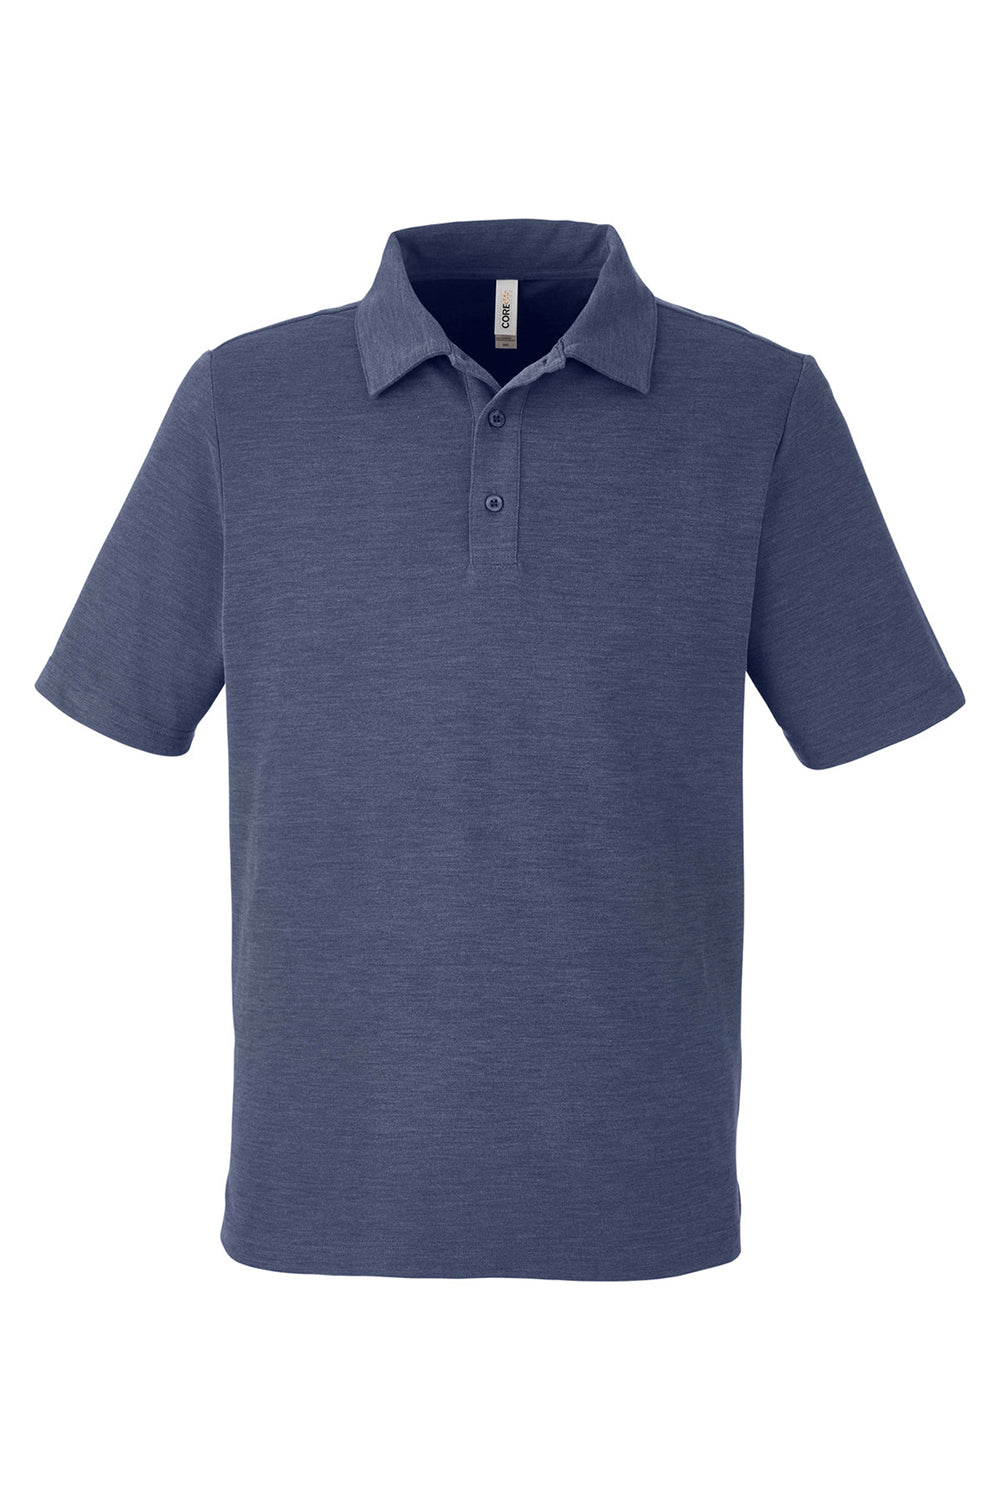 Core 365 CE112 Mens Fusion ChromaSoft Performance Moisture Wicking Short Sleeve Polo Shirt Heather Classic Navy Blue Flat Front